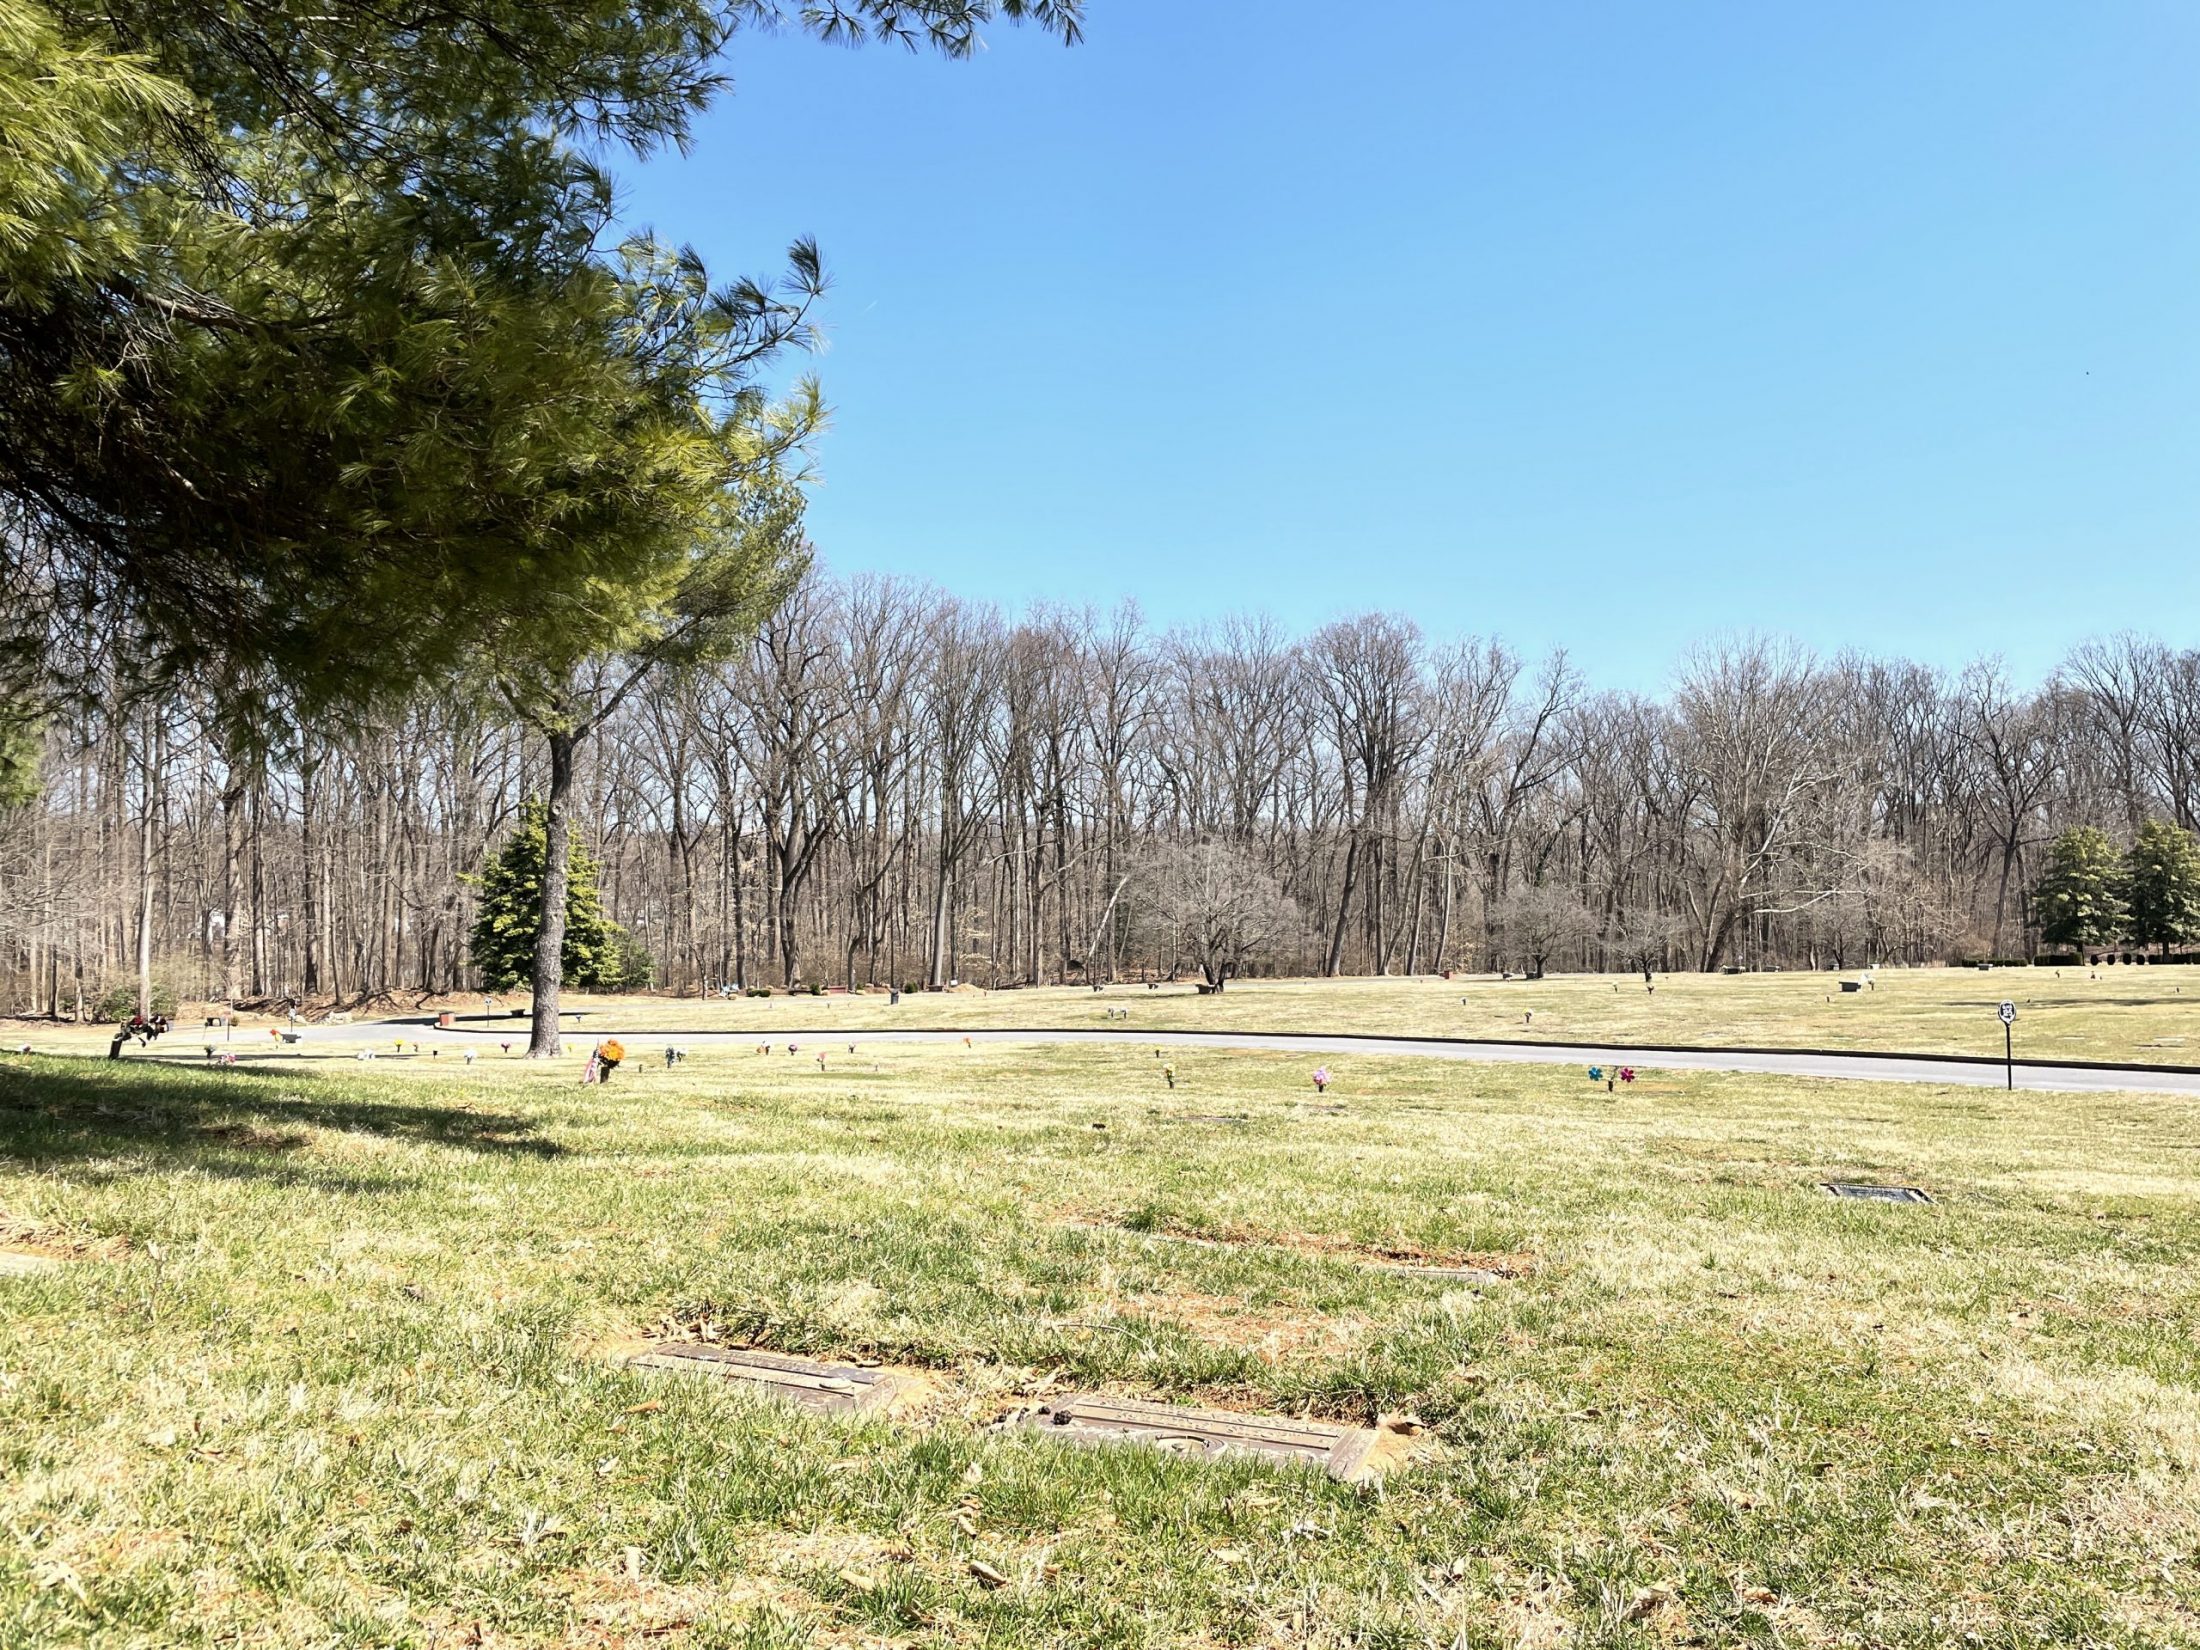 Cemetery where DC widow blog writer Marjorie Brimley buried husband Shawn